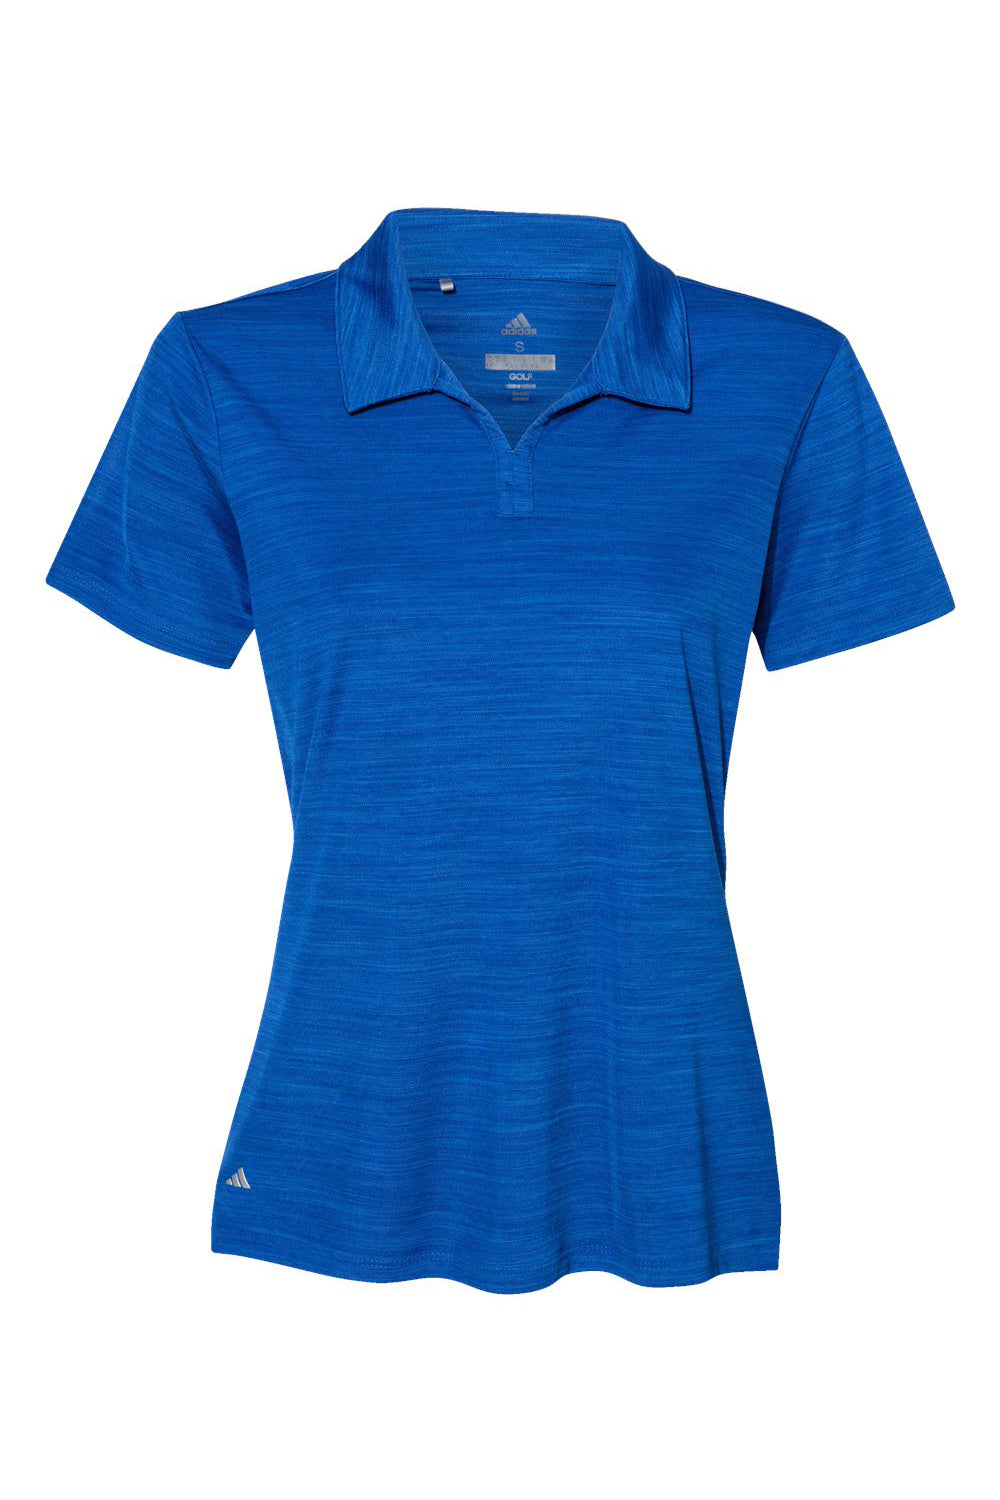 Adidas A403 Womens Melange Short Sleeve Polo Shirt Collegiate Royal Blue Melange Flat Front